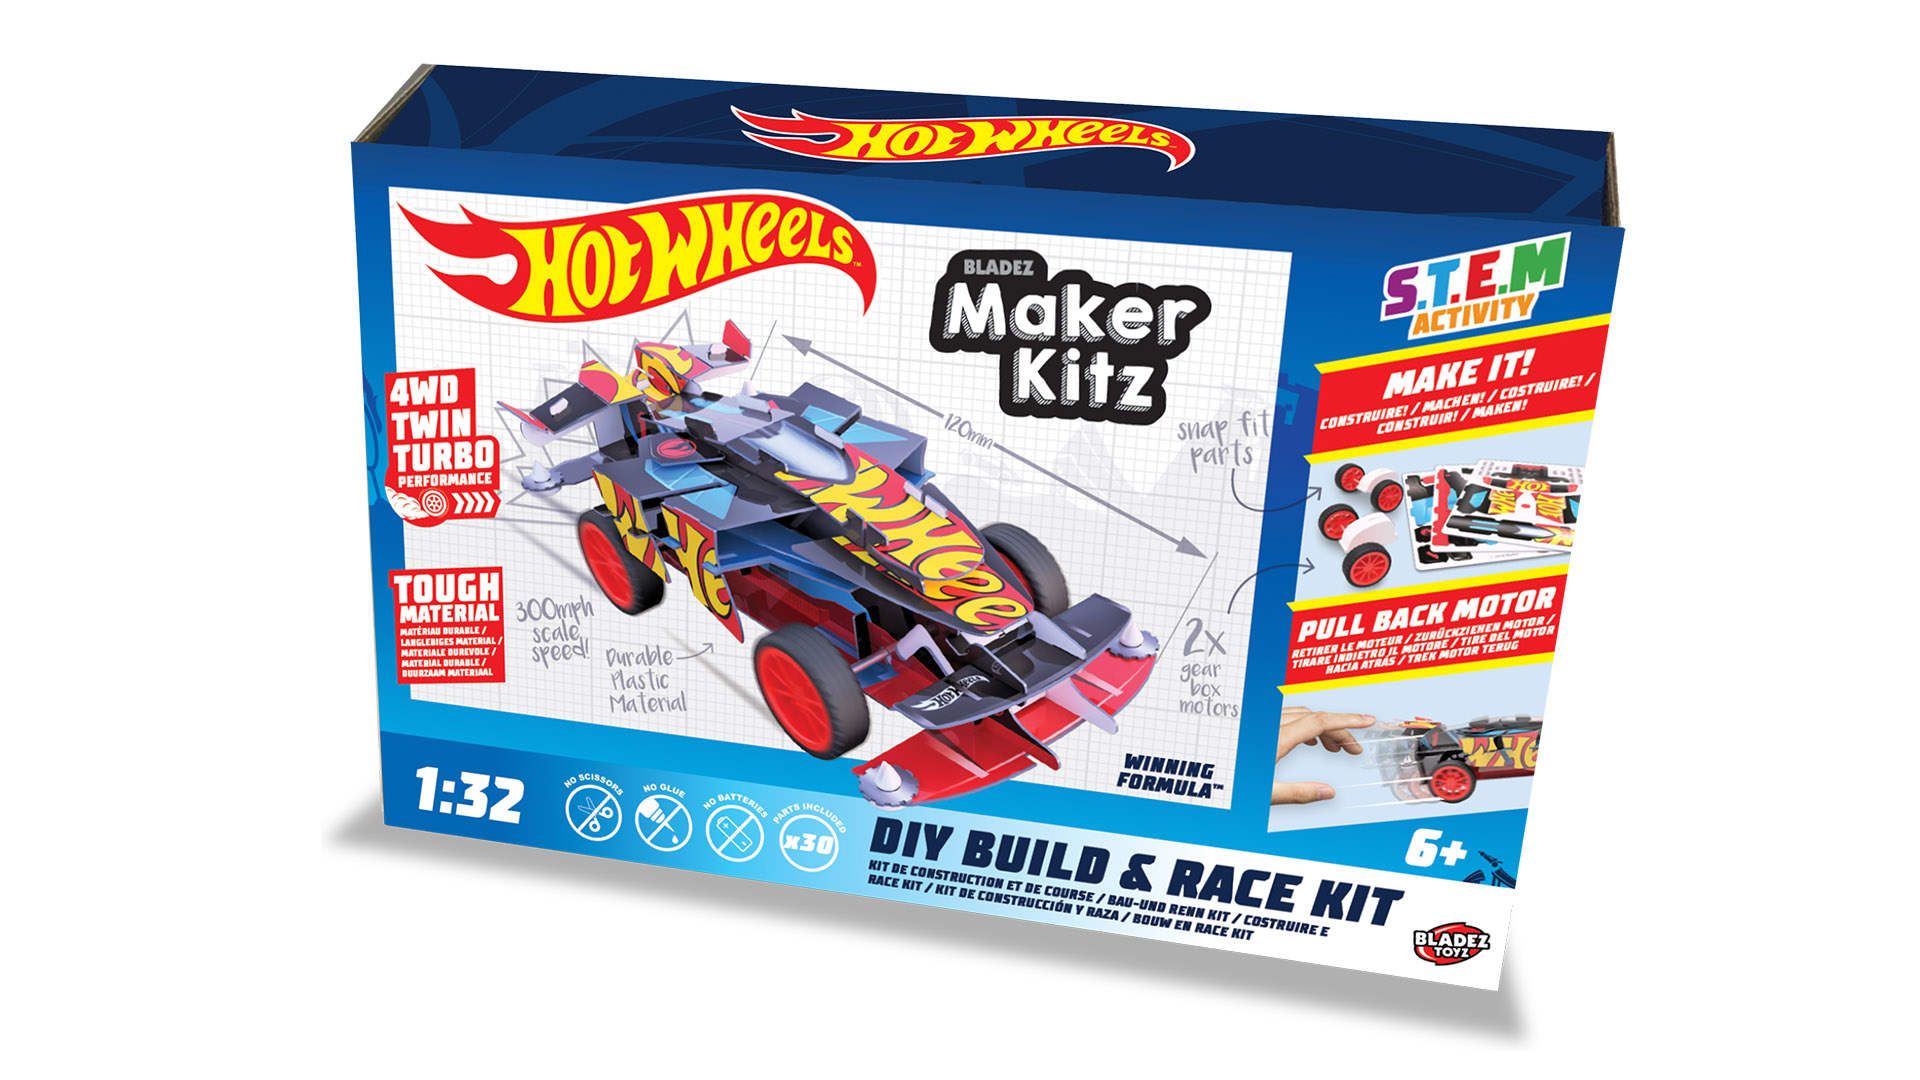 Bau und Renn Set Winning Formula Hot Wheels Maker Kitz Build & Race Kit 006 